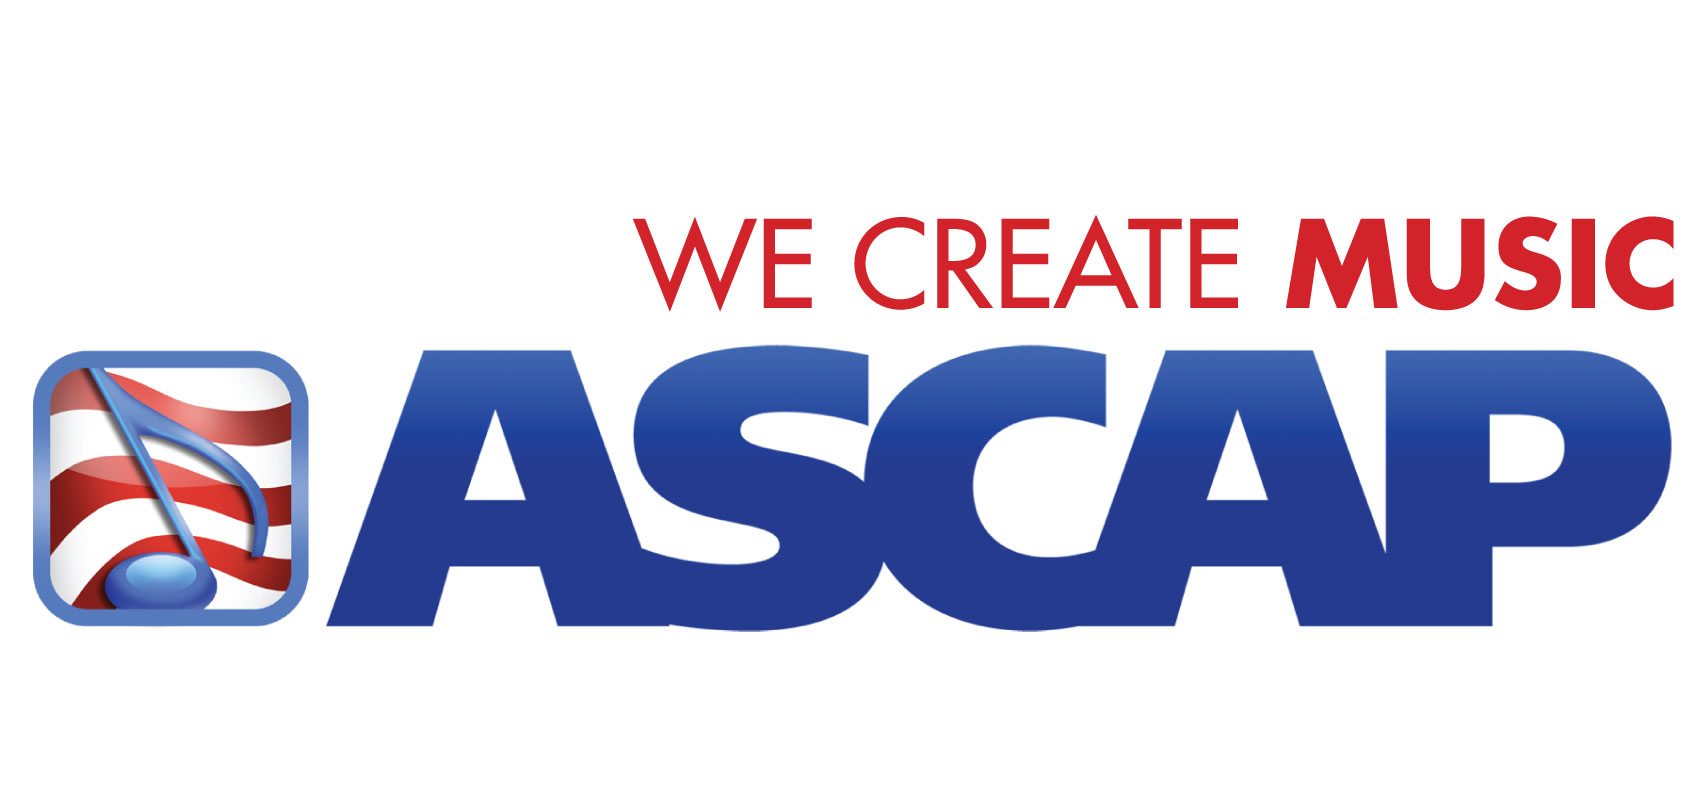 ASCAP names new CEO